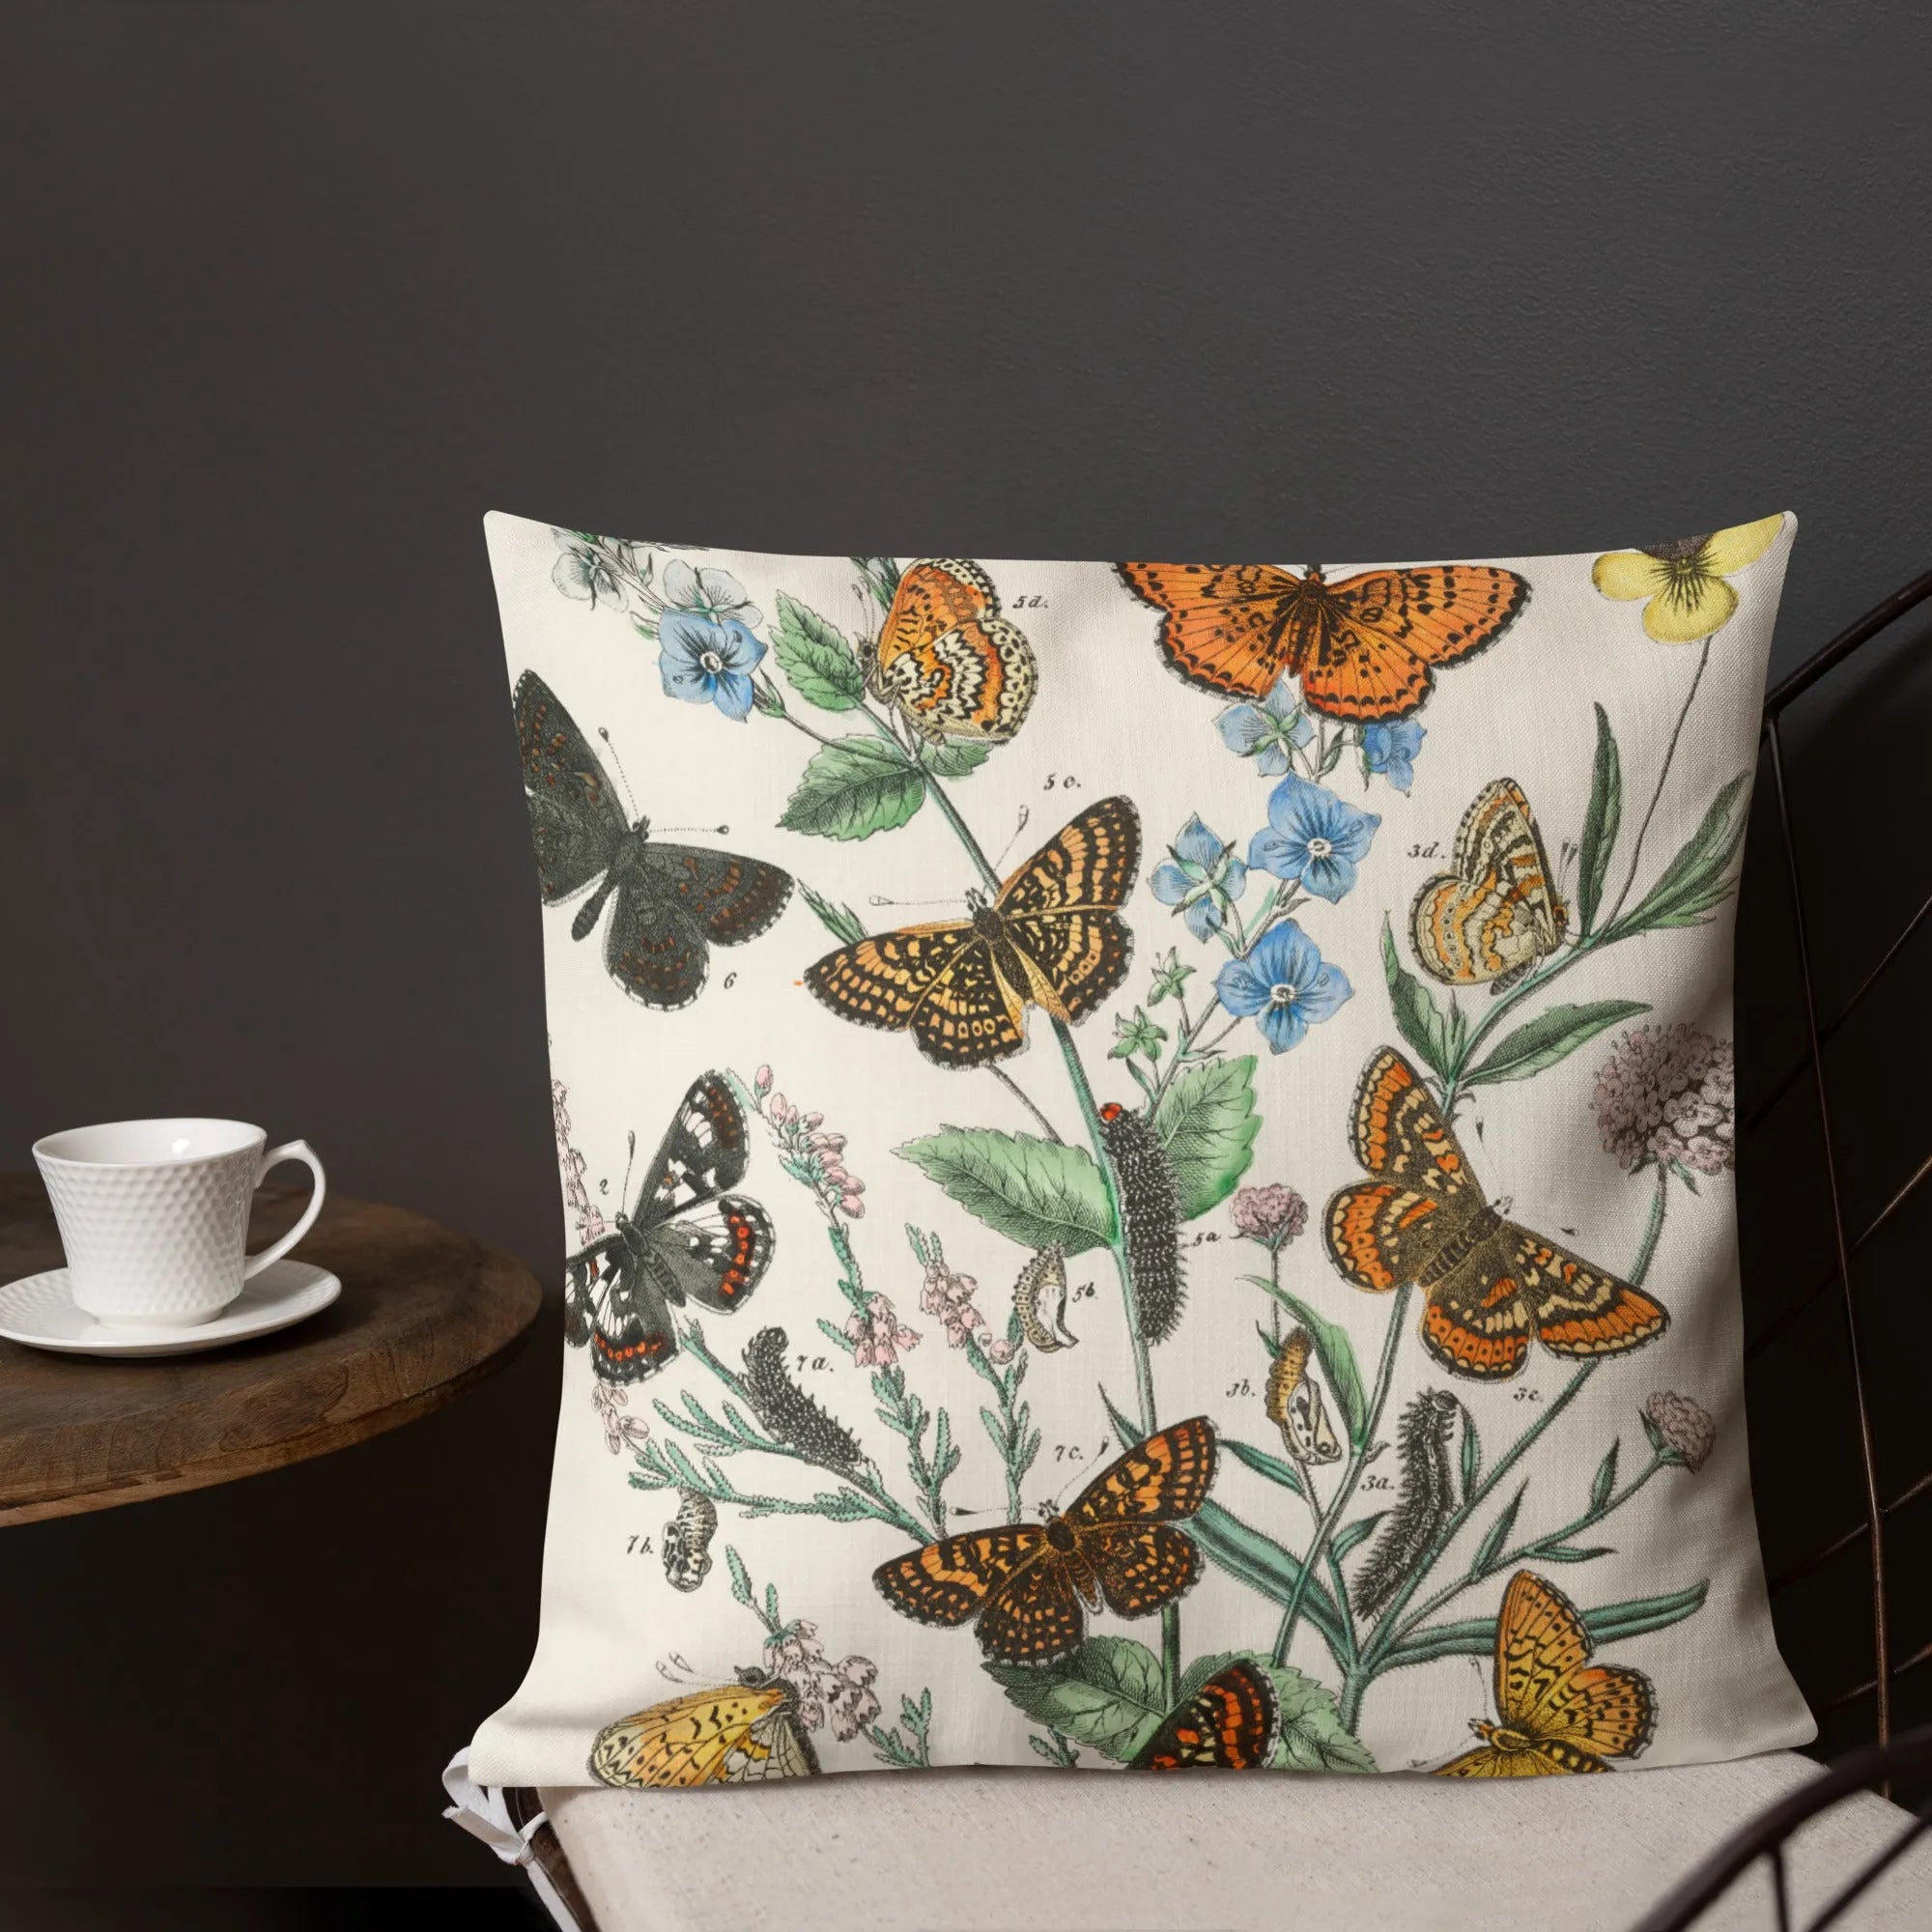 European Butterflies And Moths 2 - William Forsell Kirby Cushion - Throw Pillows - Aesthetic Art